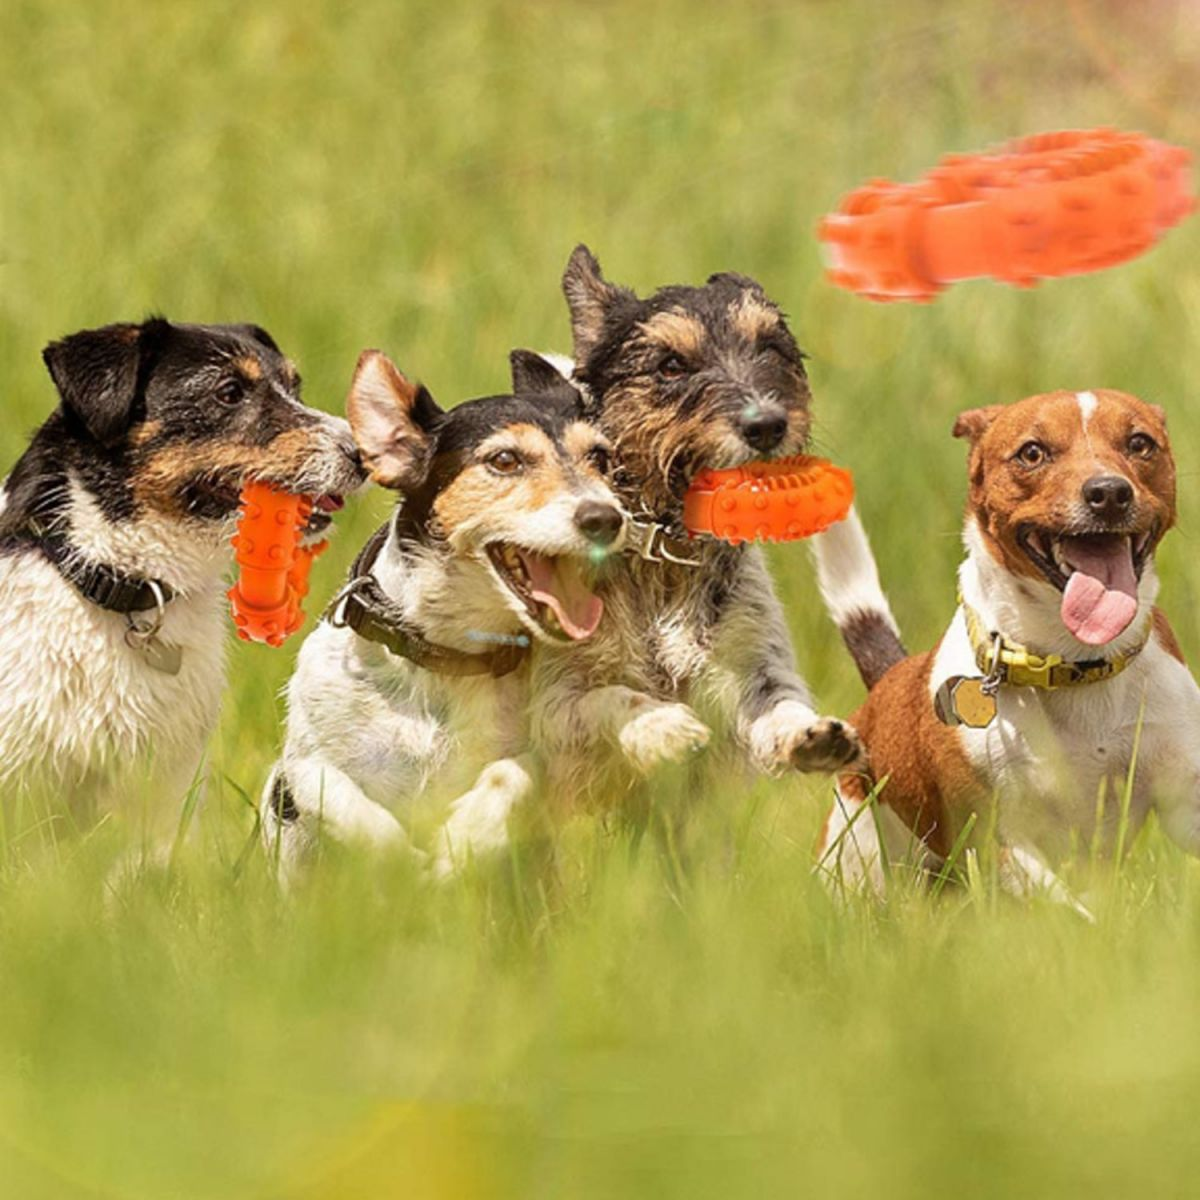 HUNKA Beißspielzeug für Hunde Hundespielzeug